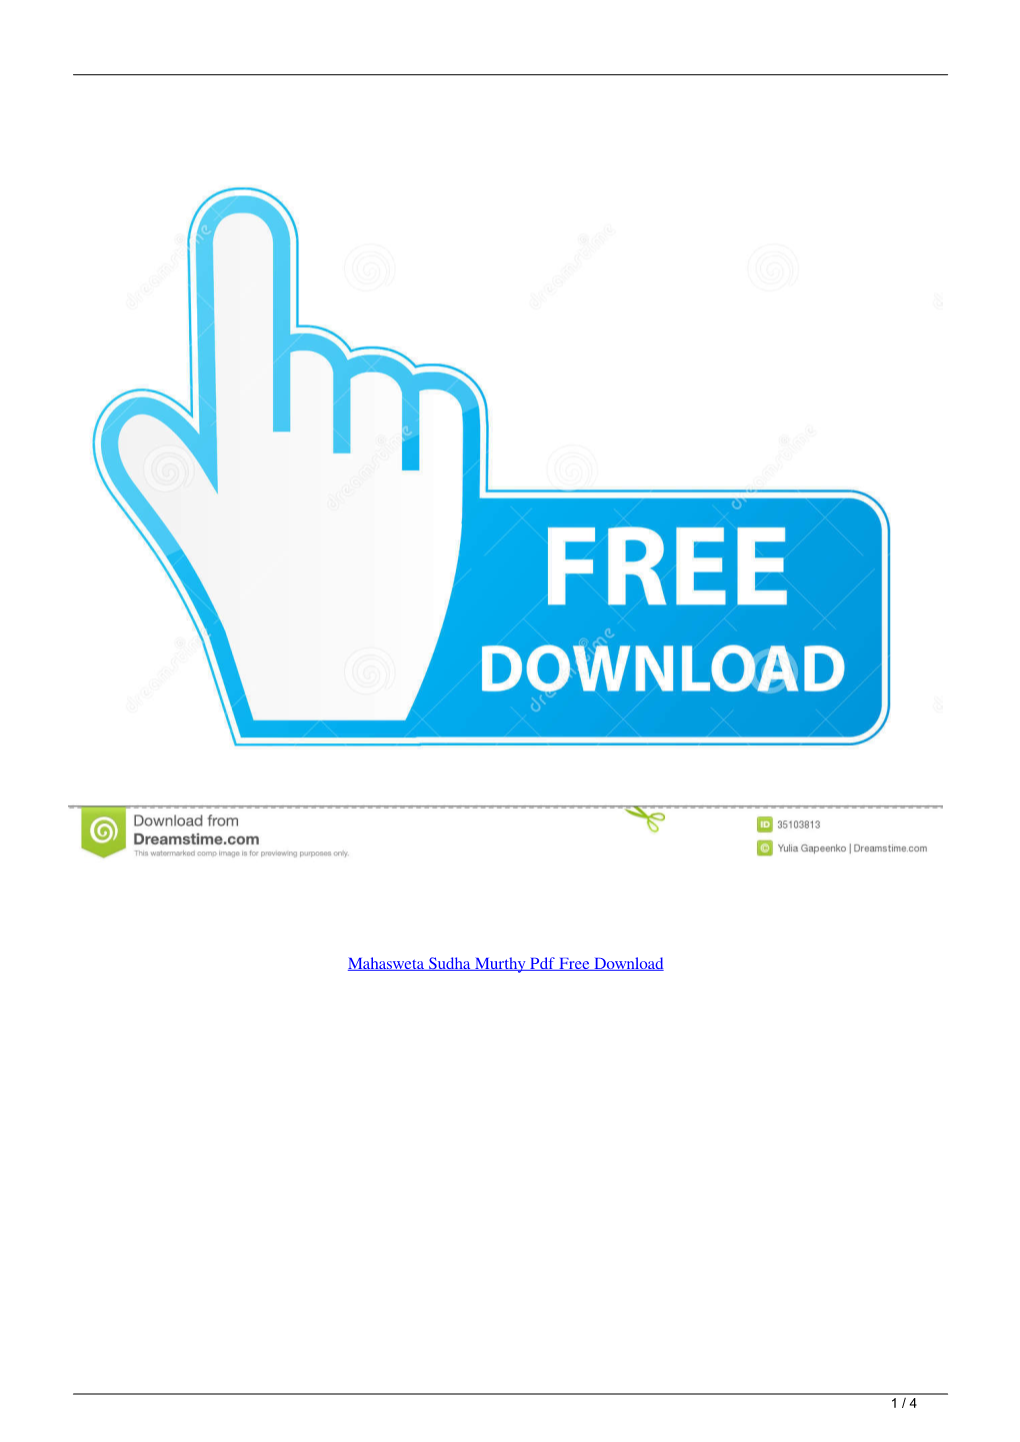 Mahasweta Sudha Murthy Pdf Free Download